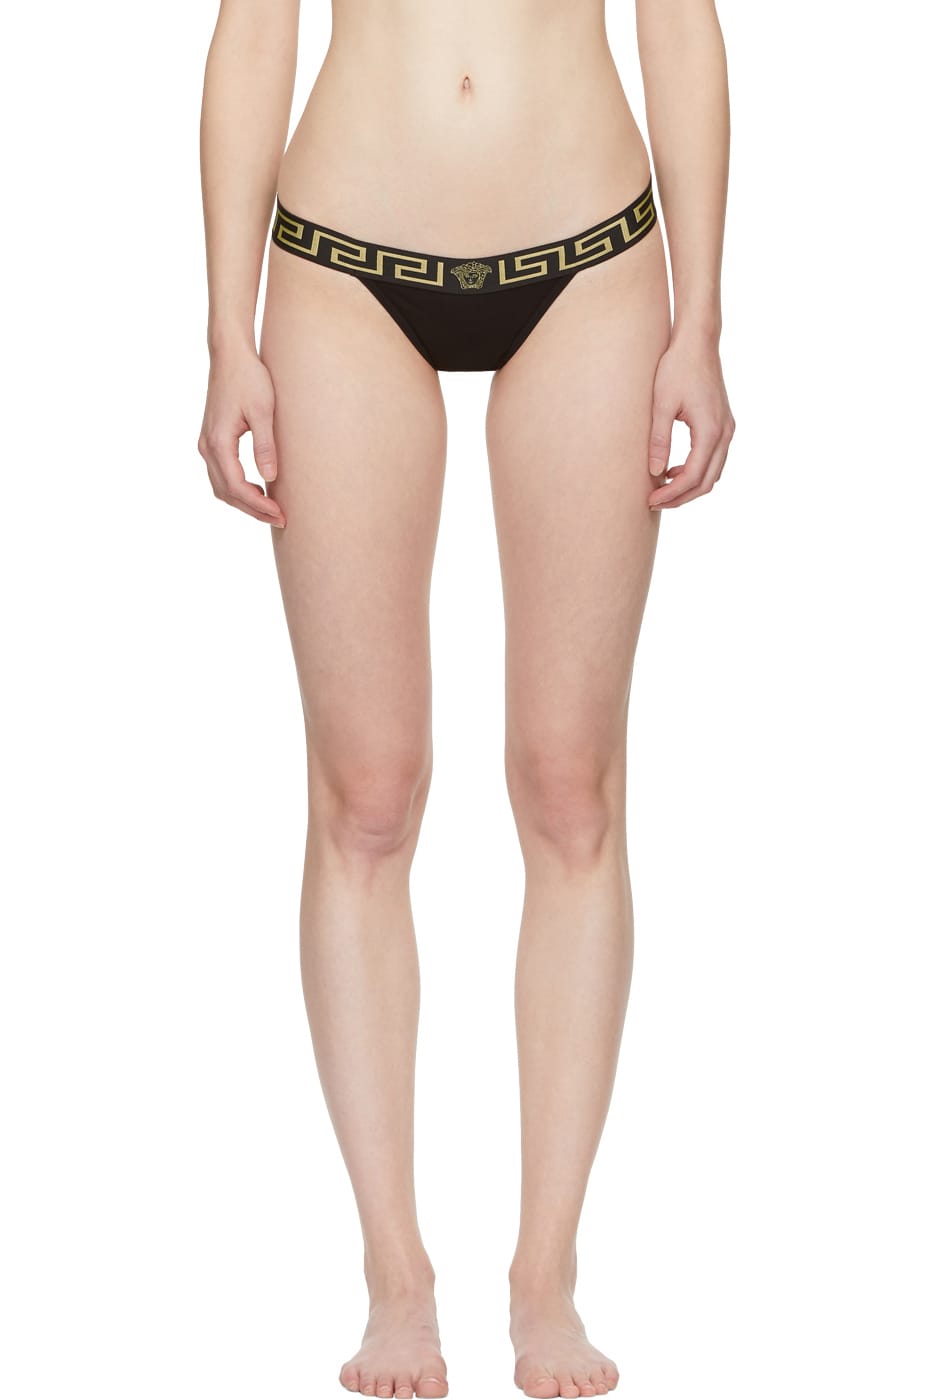 ssense versace underwear, OFF 72%,Buy!